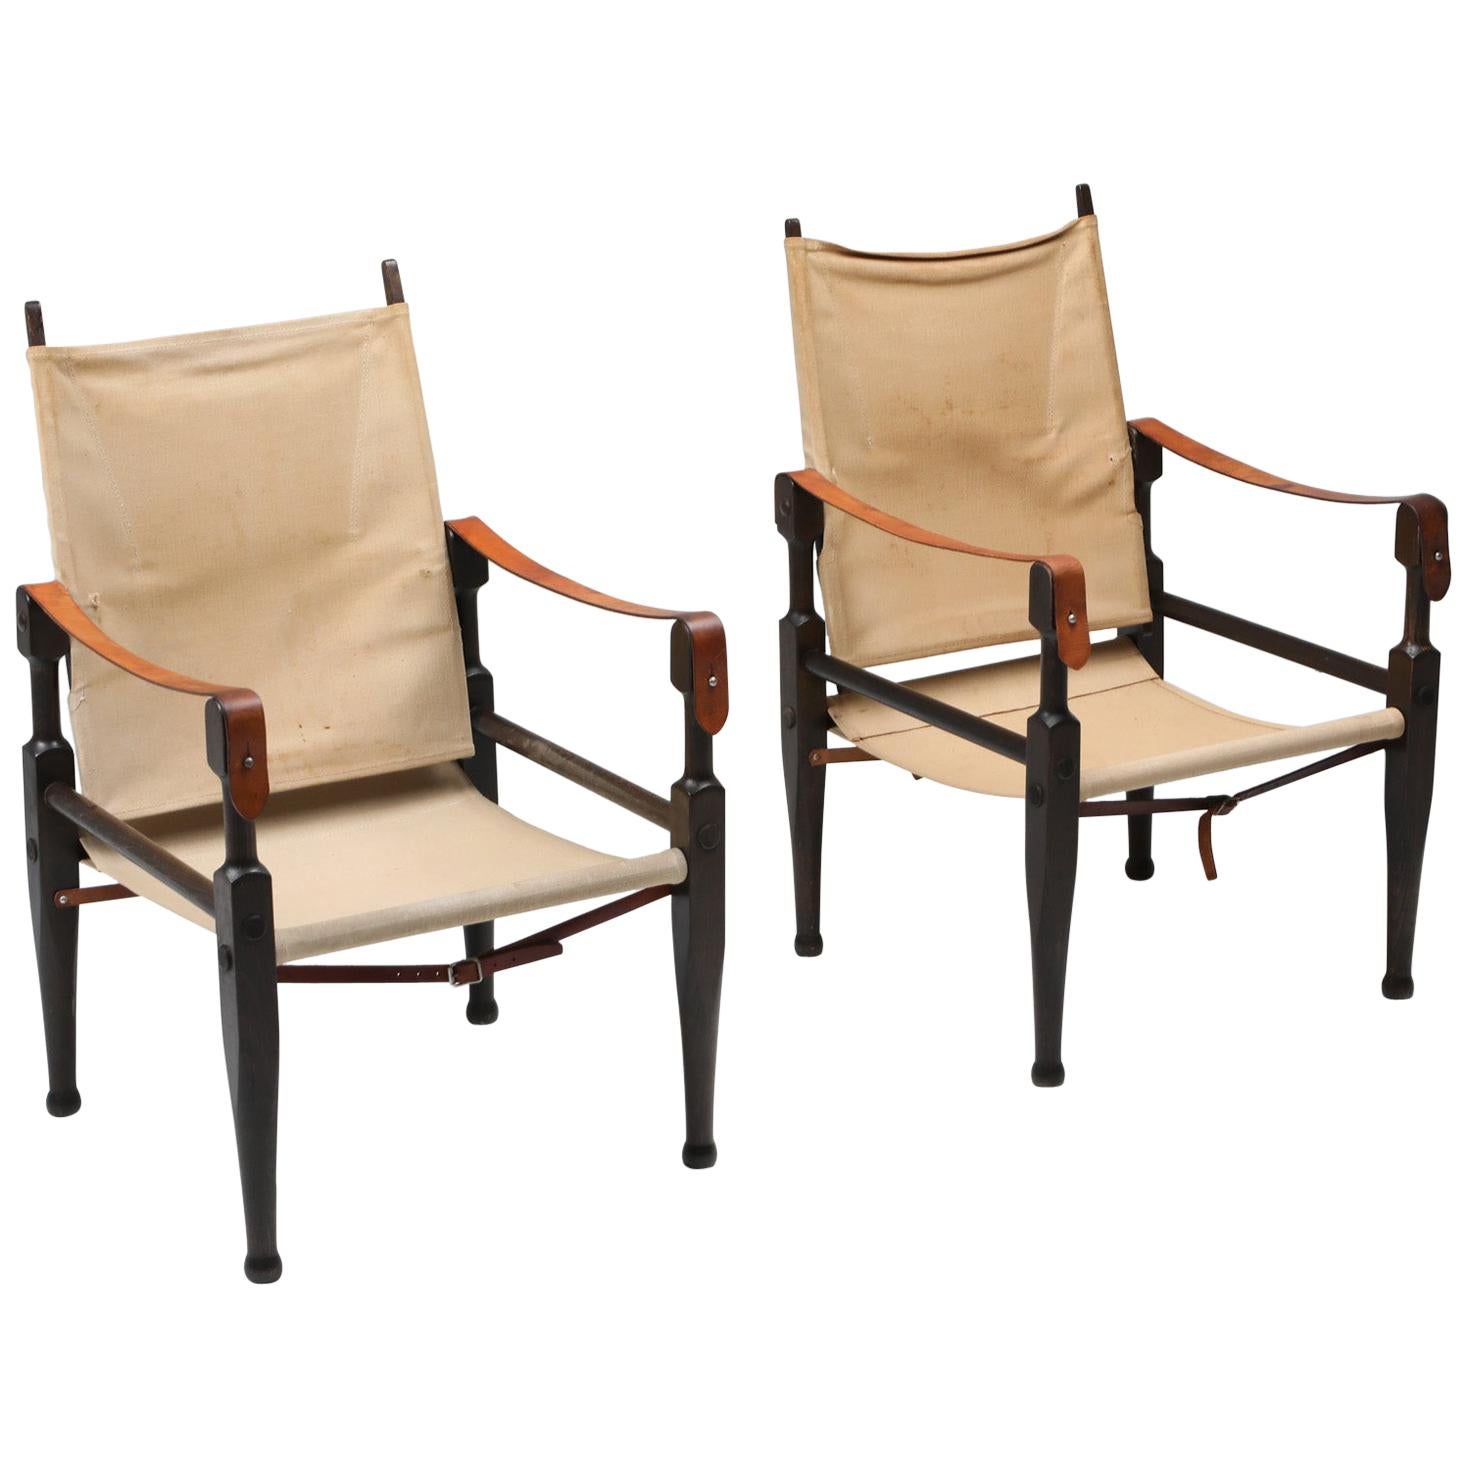 Safari Chairs Designed by Kaare Klint for Rud Rasmussen, Denmark, 1960s